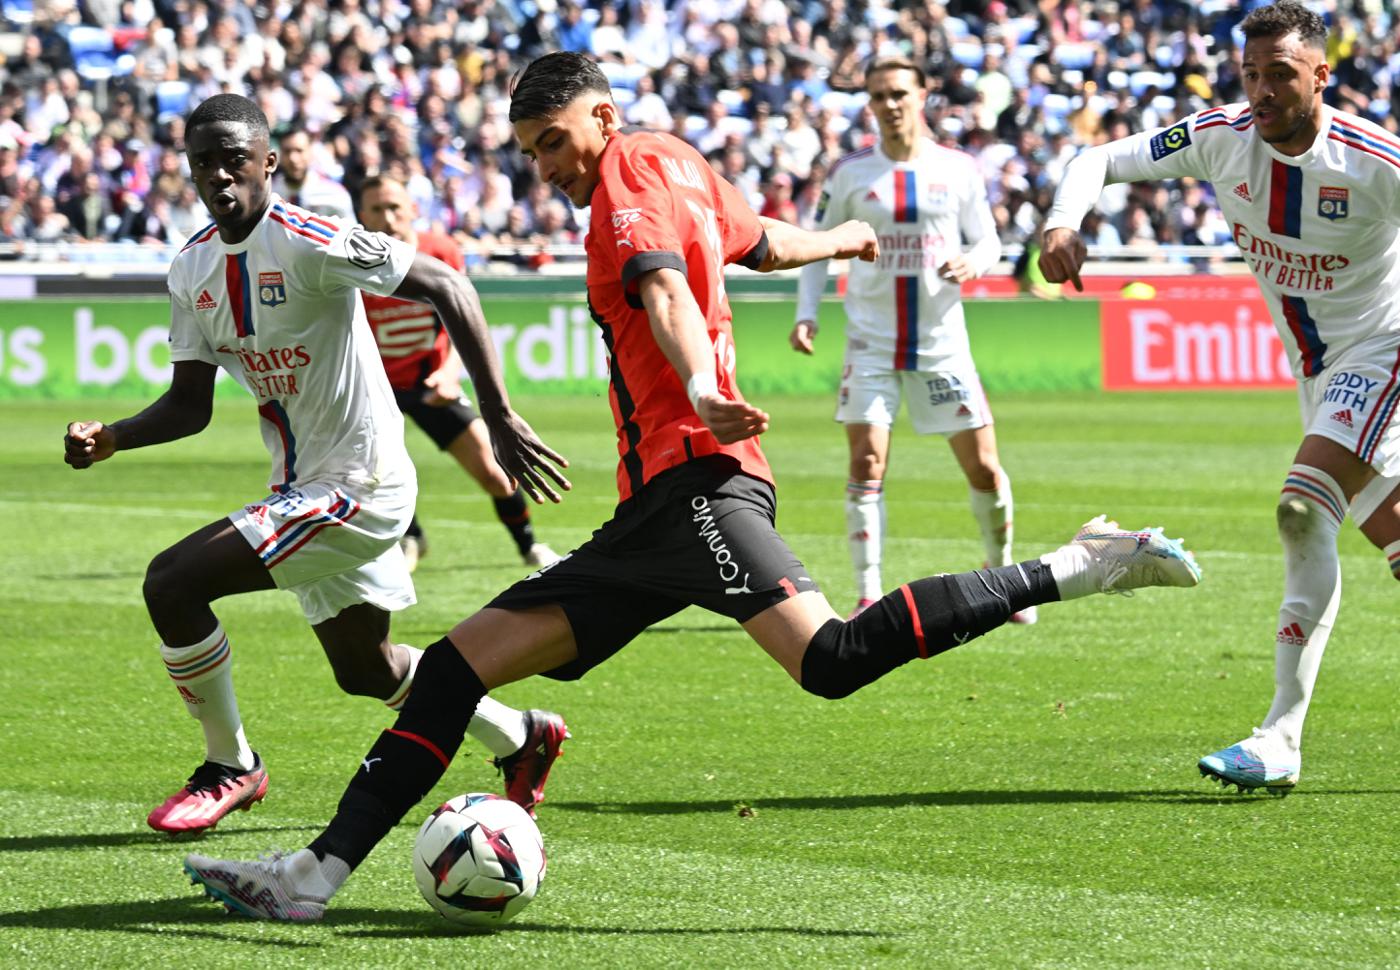 Lyon - Rennes - 3:1. French Championship, round 30. Match review, statistics.